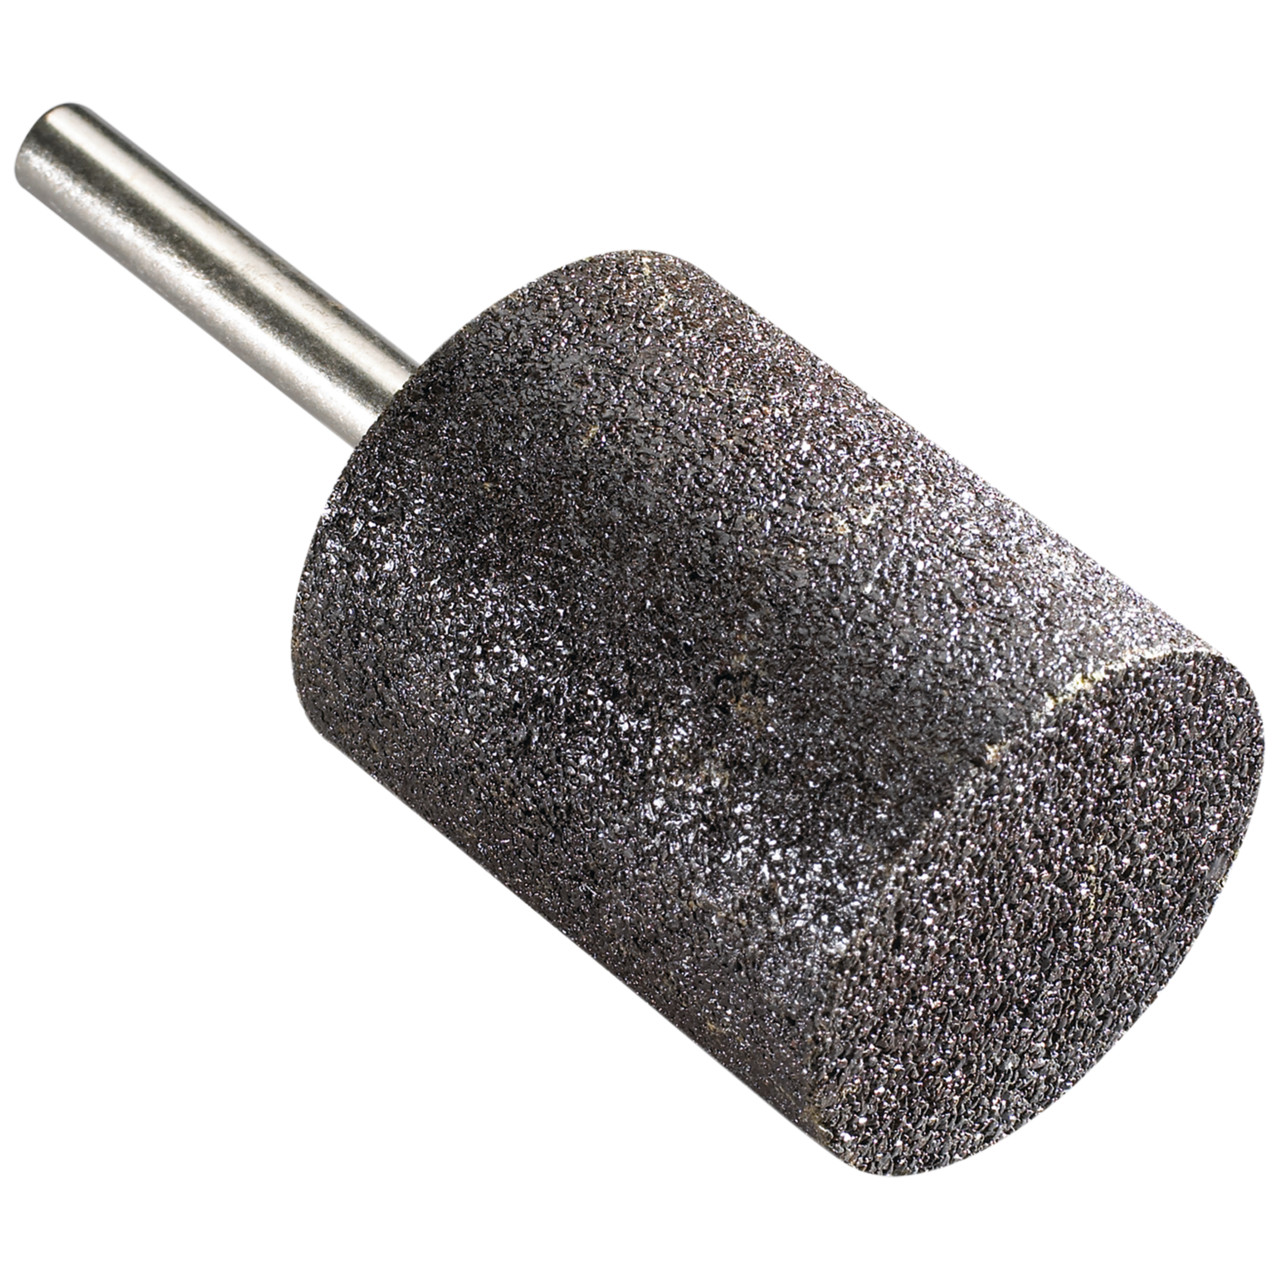 Tyrolit Punti montati in resina DxT-SxL 32x64-8x40 Per ghisa, forma: 52W - cilindro (punto montato), Art. 21232